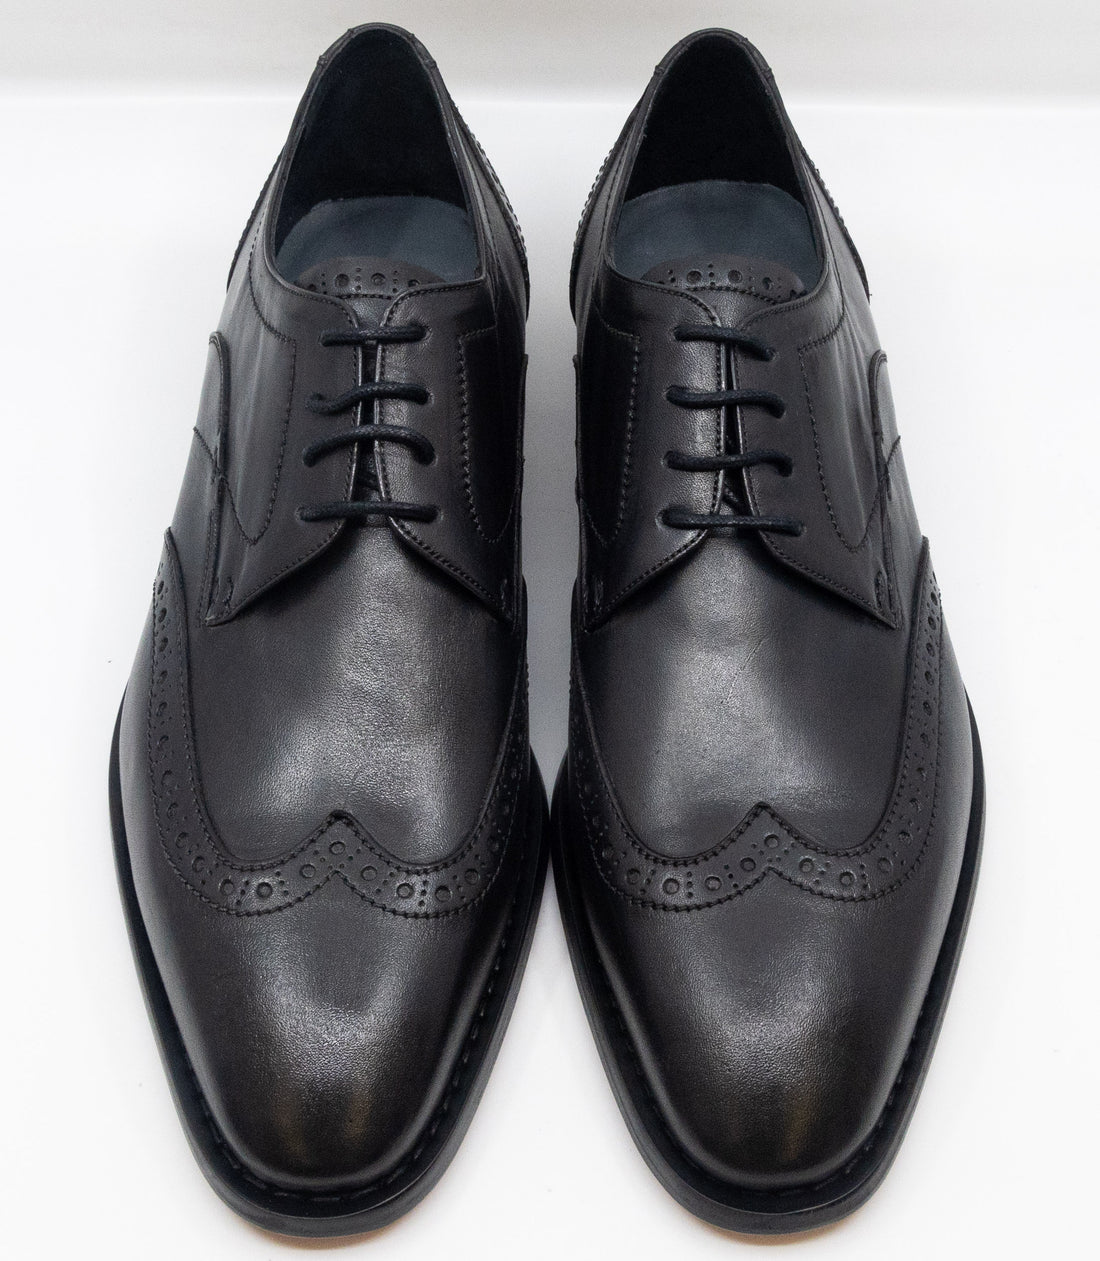 Connaisseur - Black leather wing tip laced dress shoes